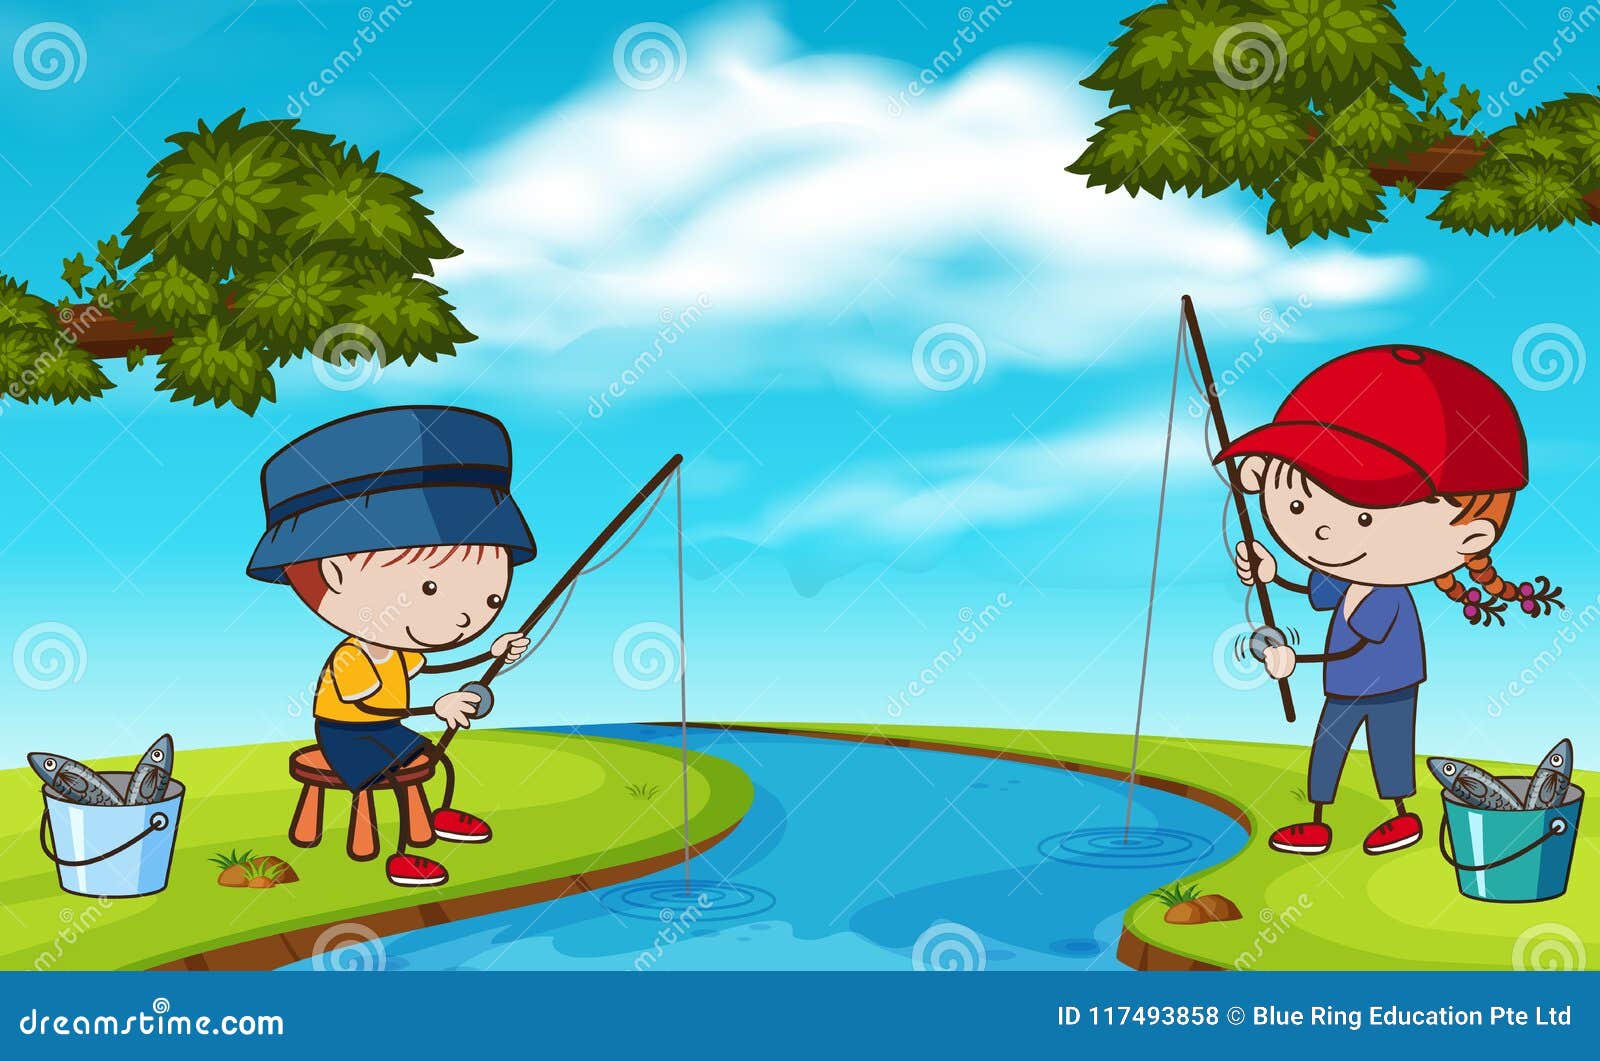 https://thumbs.dreamstime.com/z/doodle-kids-fishing-river-illustration-doodle-kids-fishing-river-117493858.jpg